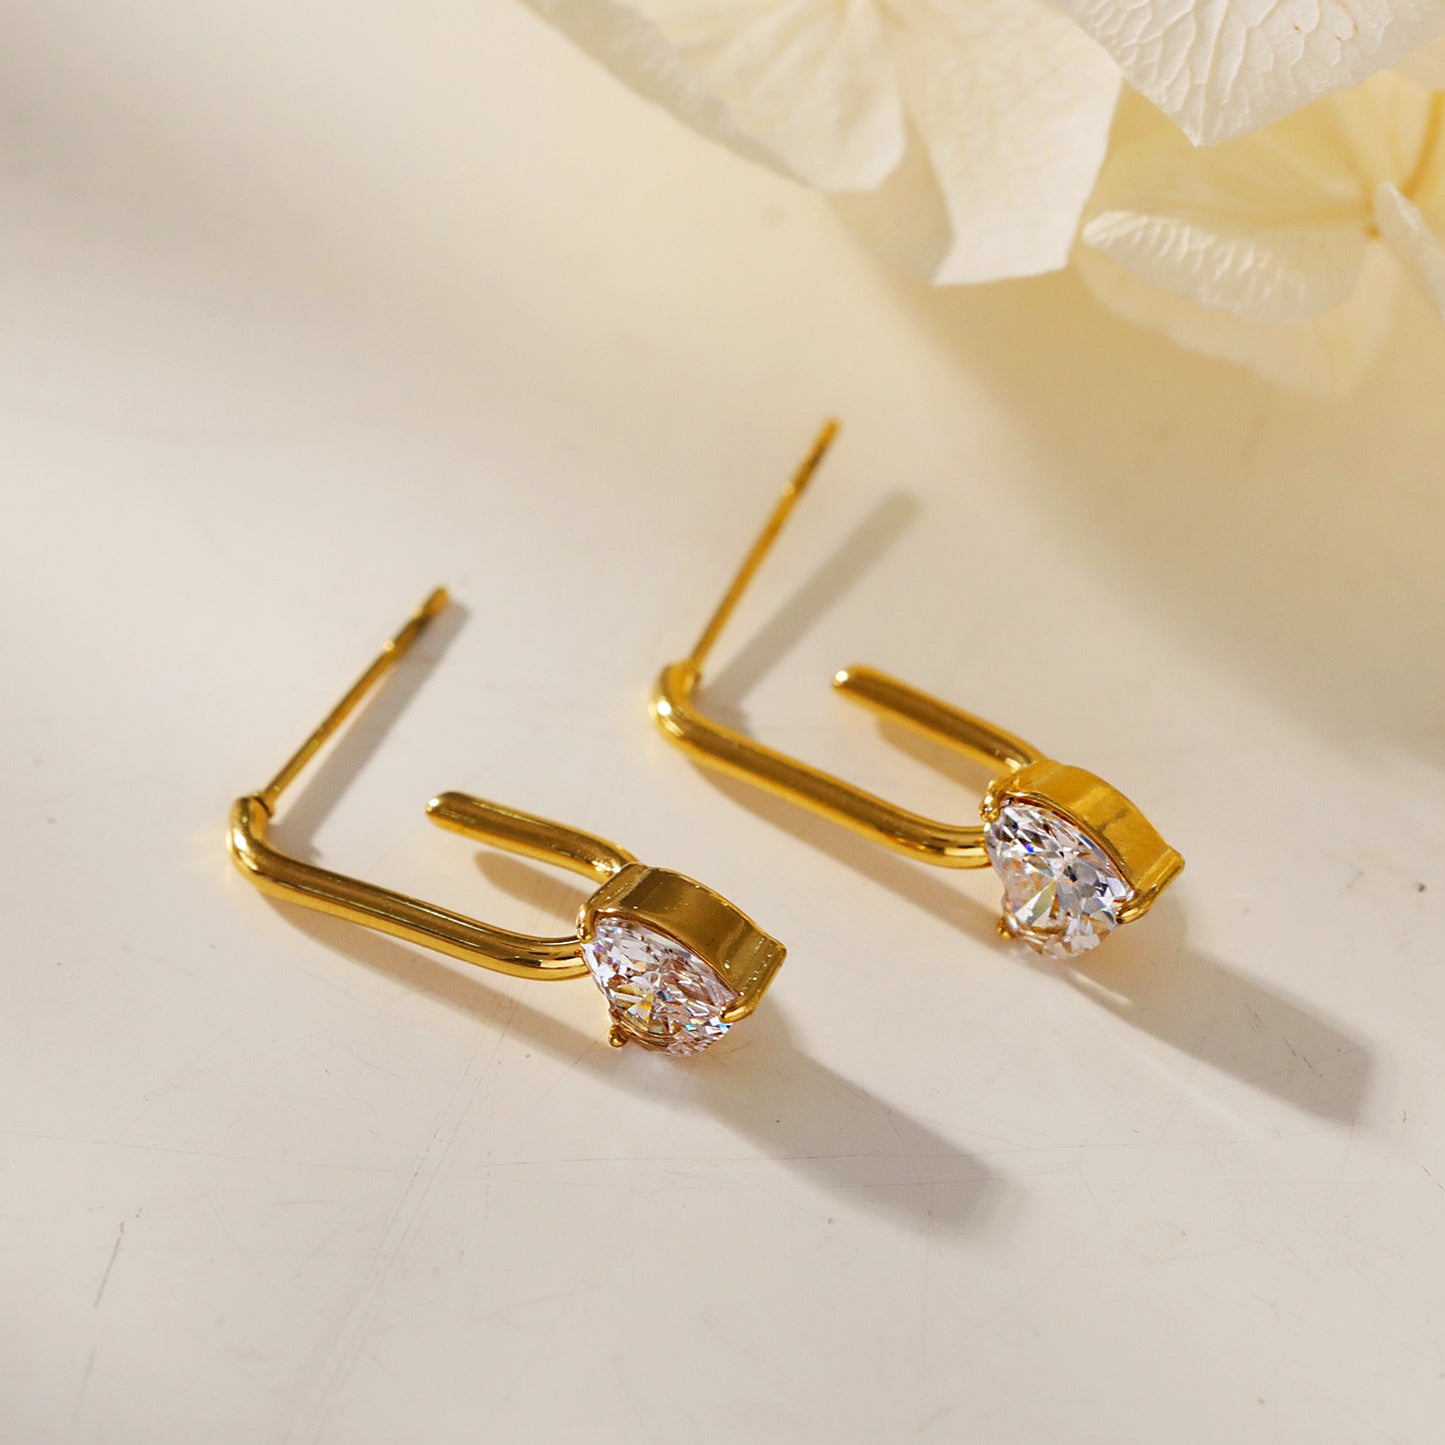 HACKNEY_NINE | Style ARETE 92656: Timeless Romance - Heart Gemstone Paper-Clip Earrings.